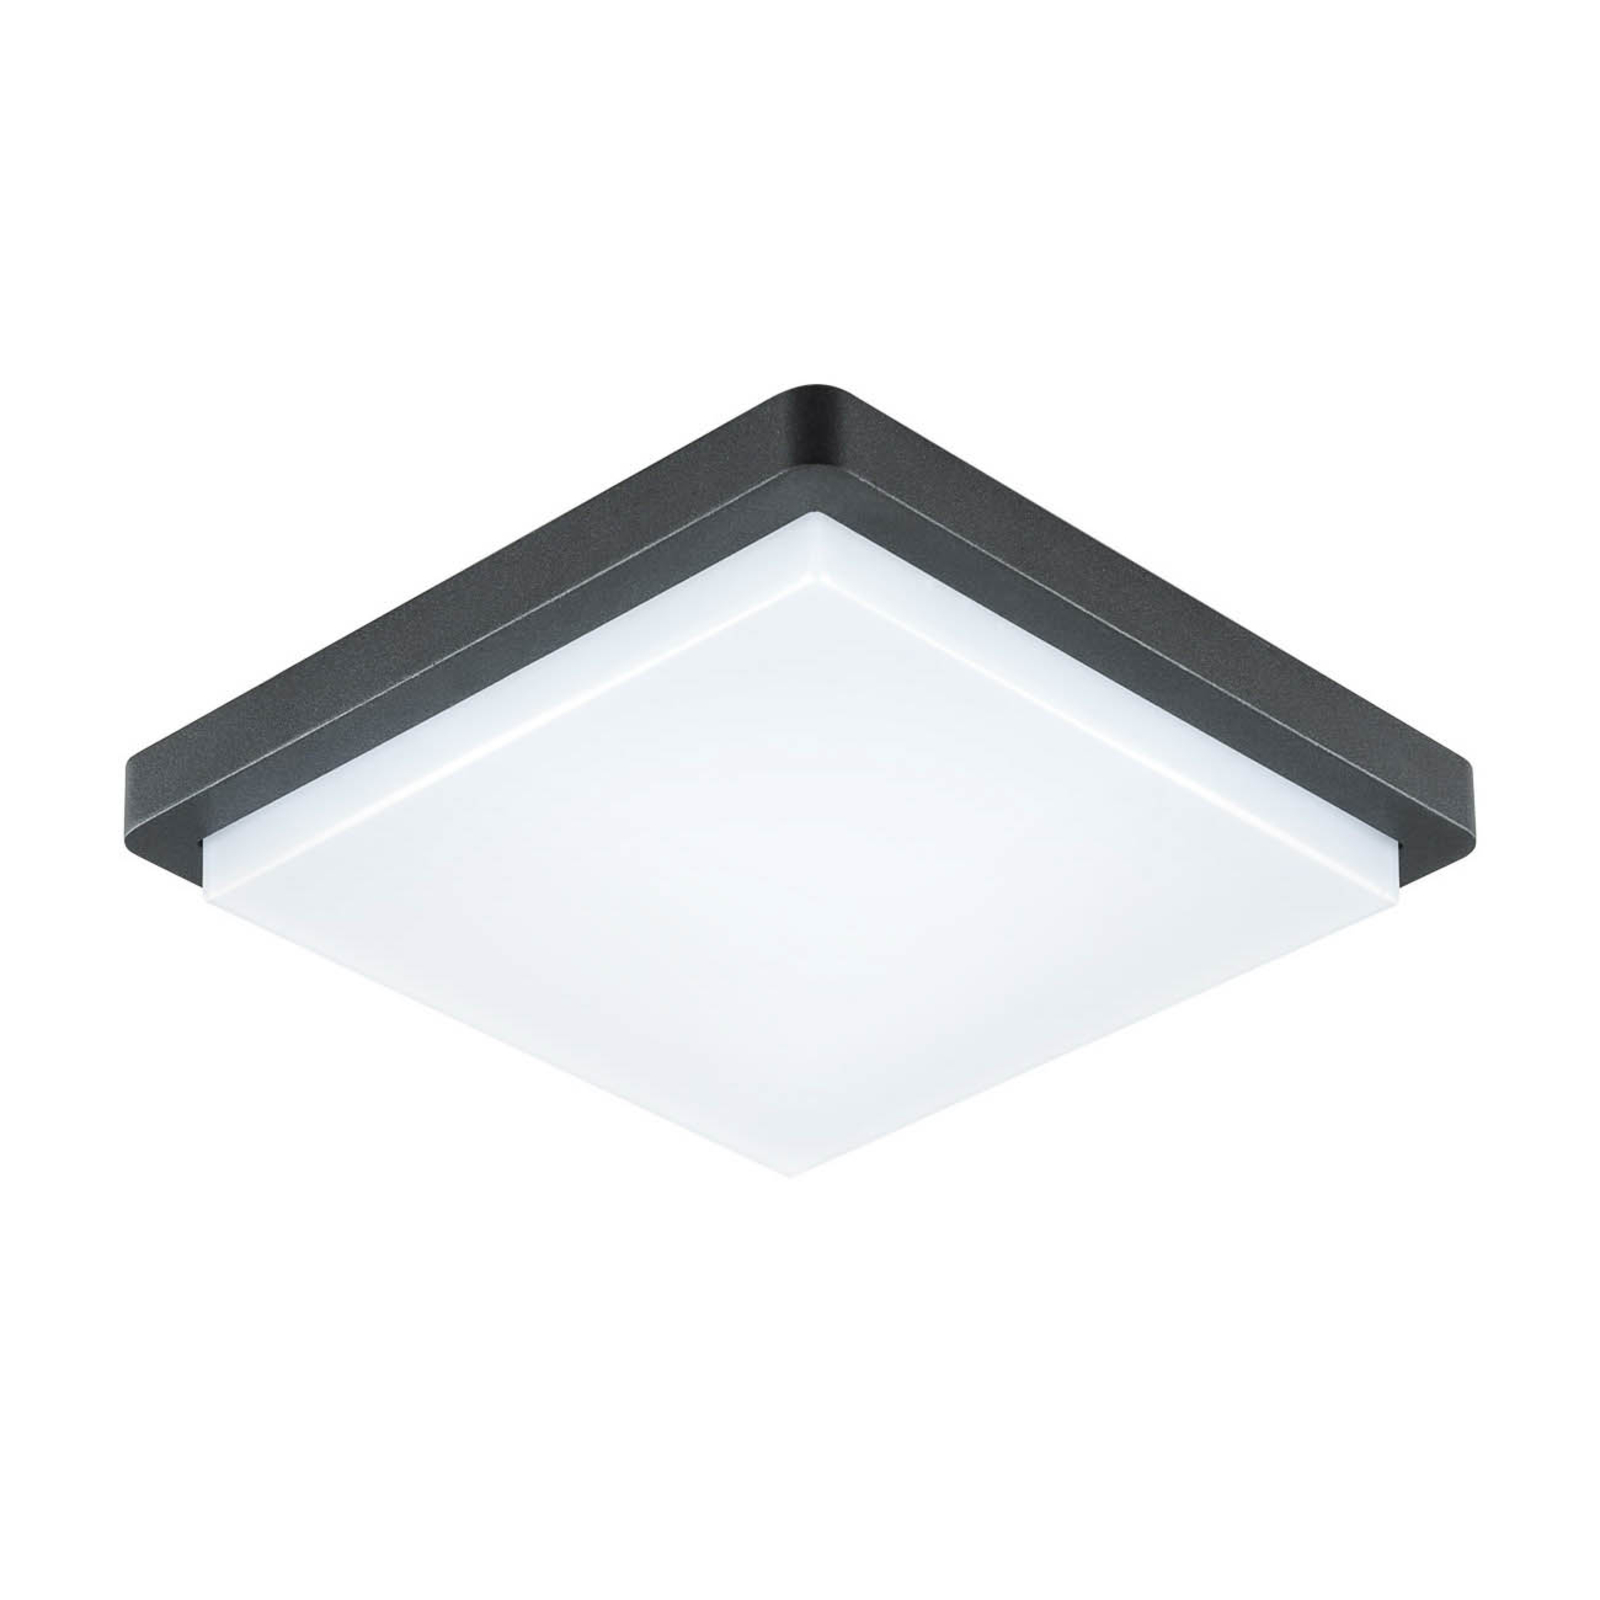 EVN Tectum LED outdoor ceiling light angular 150°